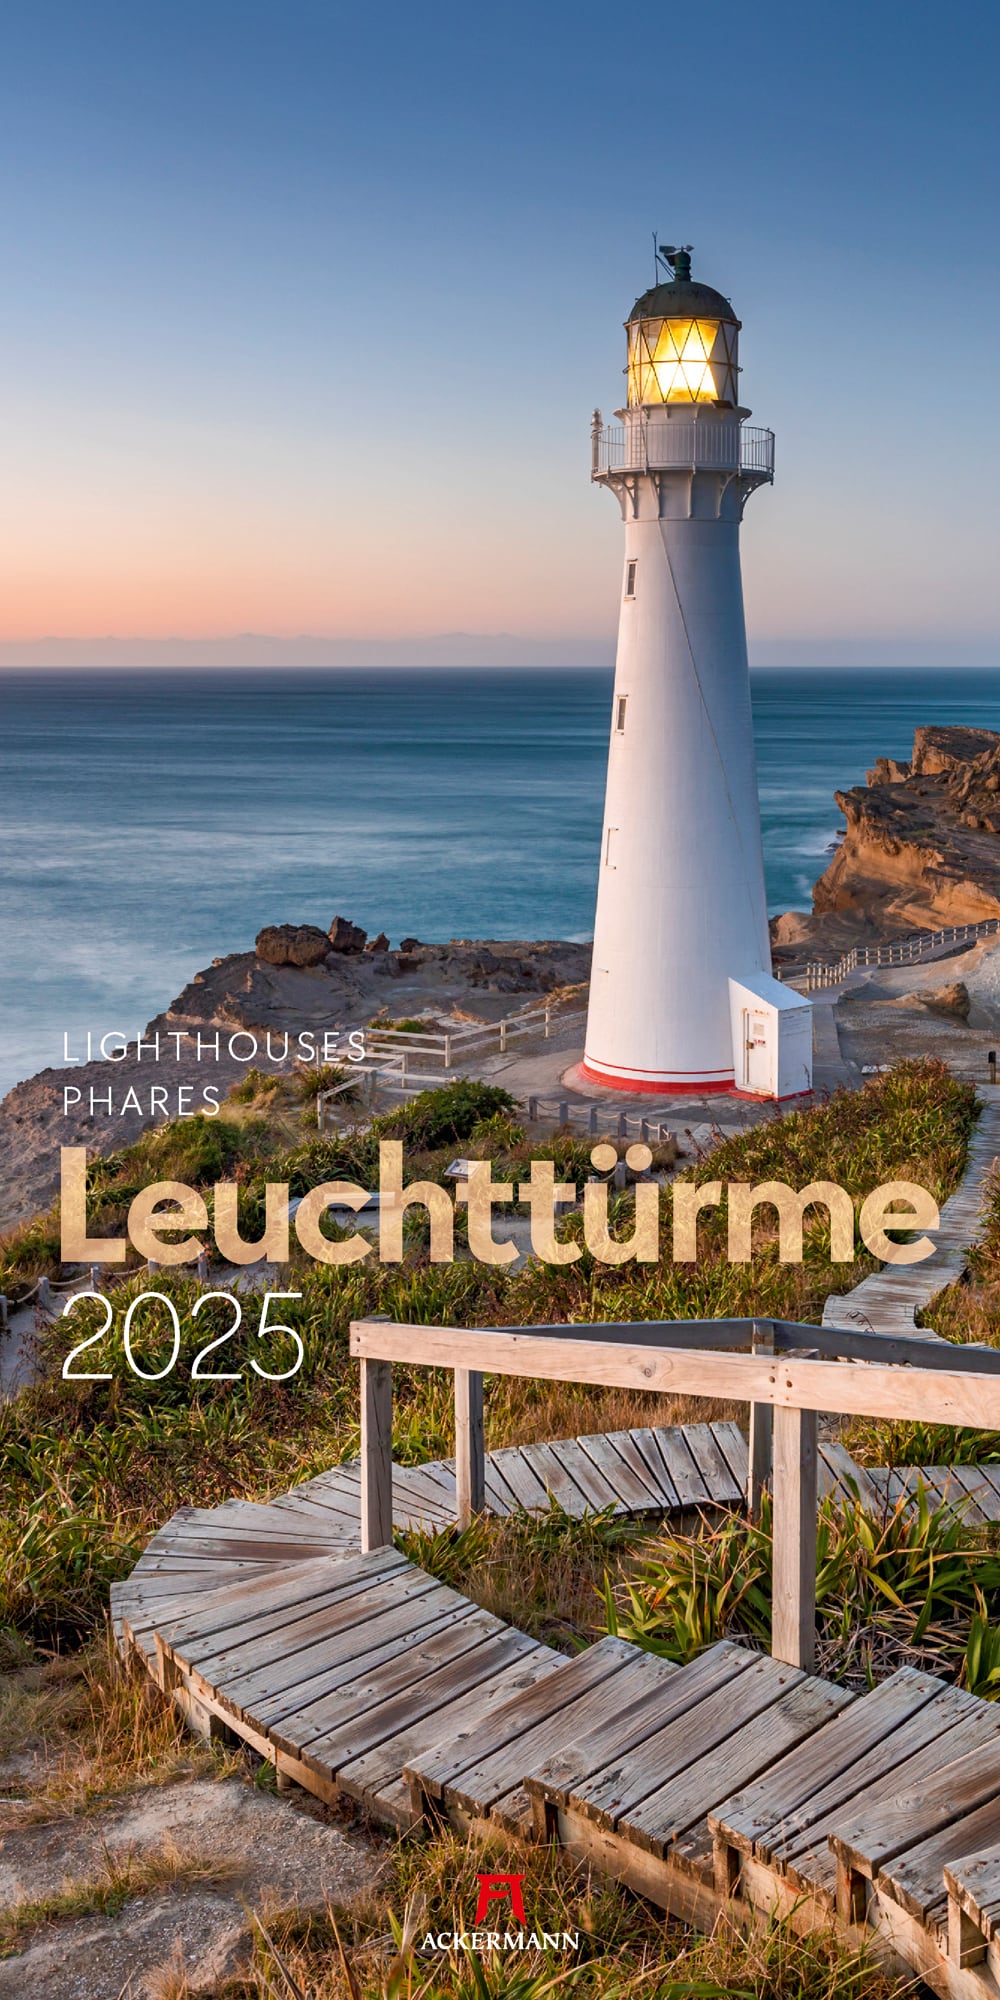 Ackermann Calendar Lighthouses 2025 - Cover Page